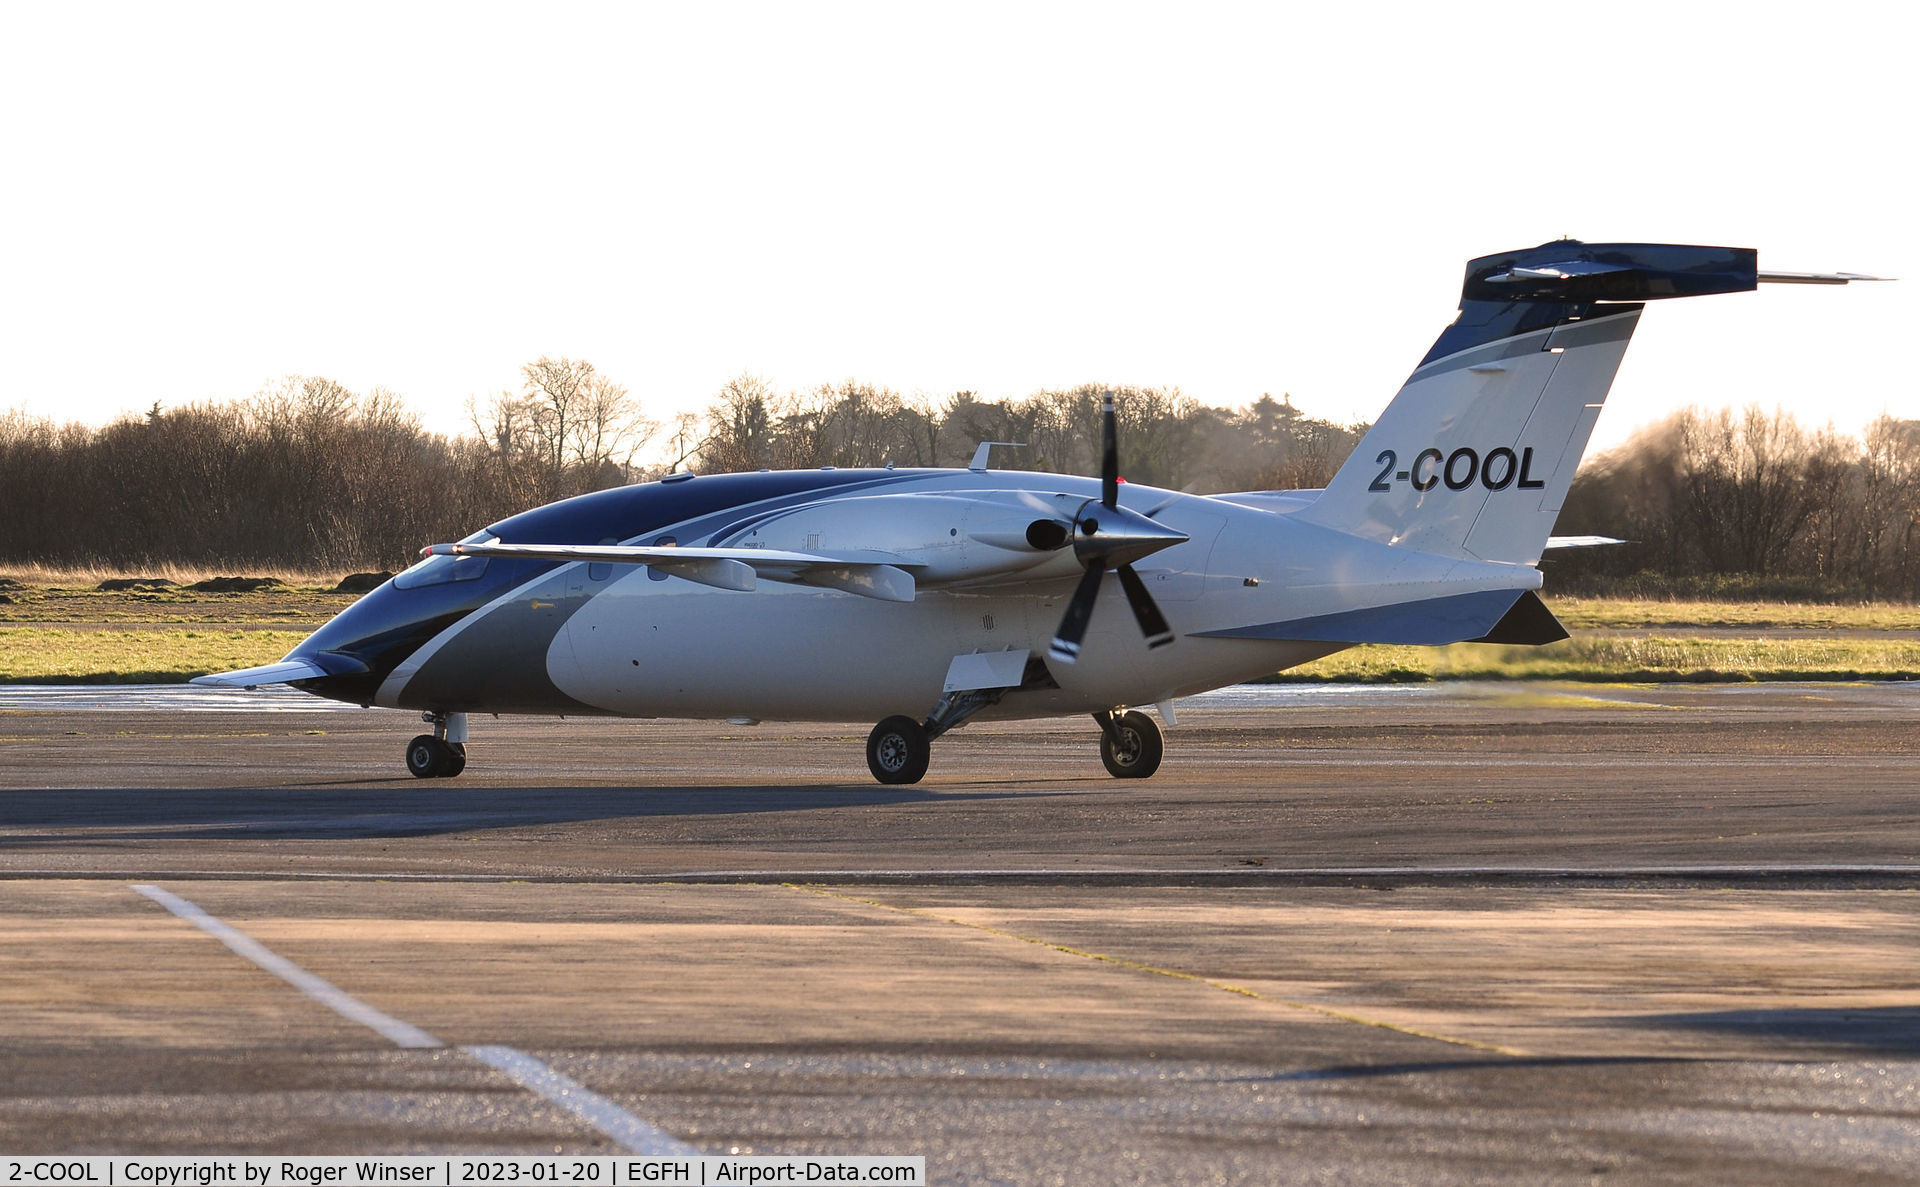 2-COOL, 2007 Piaggio P-180 Avanti II C/N 1149, Visiting Avanti II operated by Skypark UK.